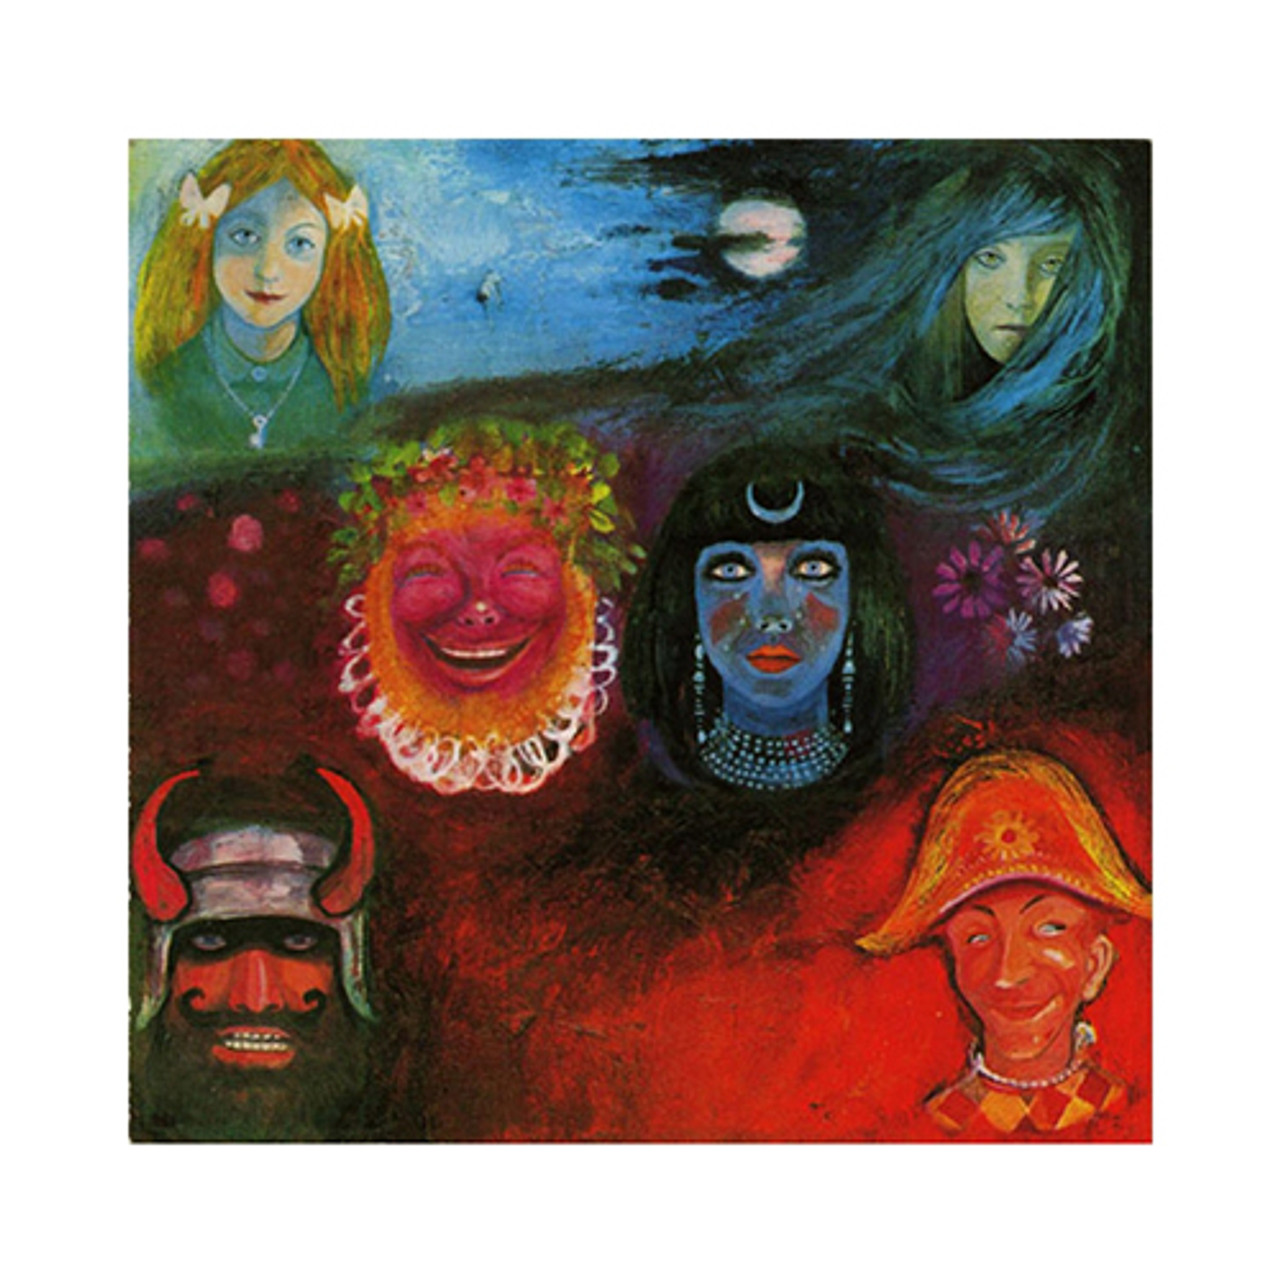 King Crimson - In The Wake Of Import Vinyl LP) * - Music Direct